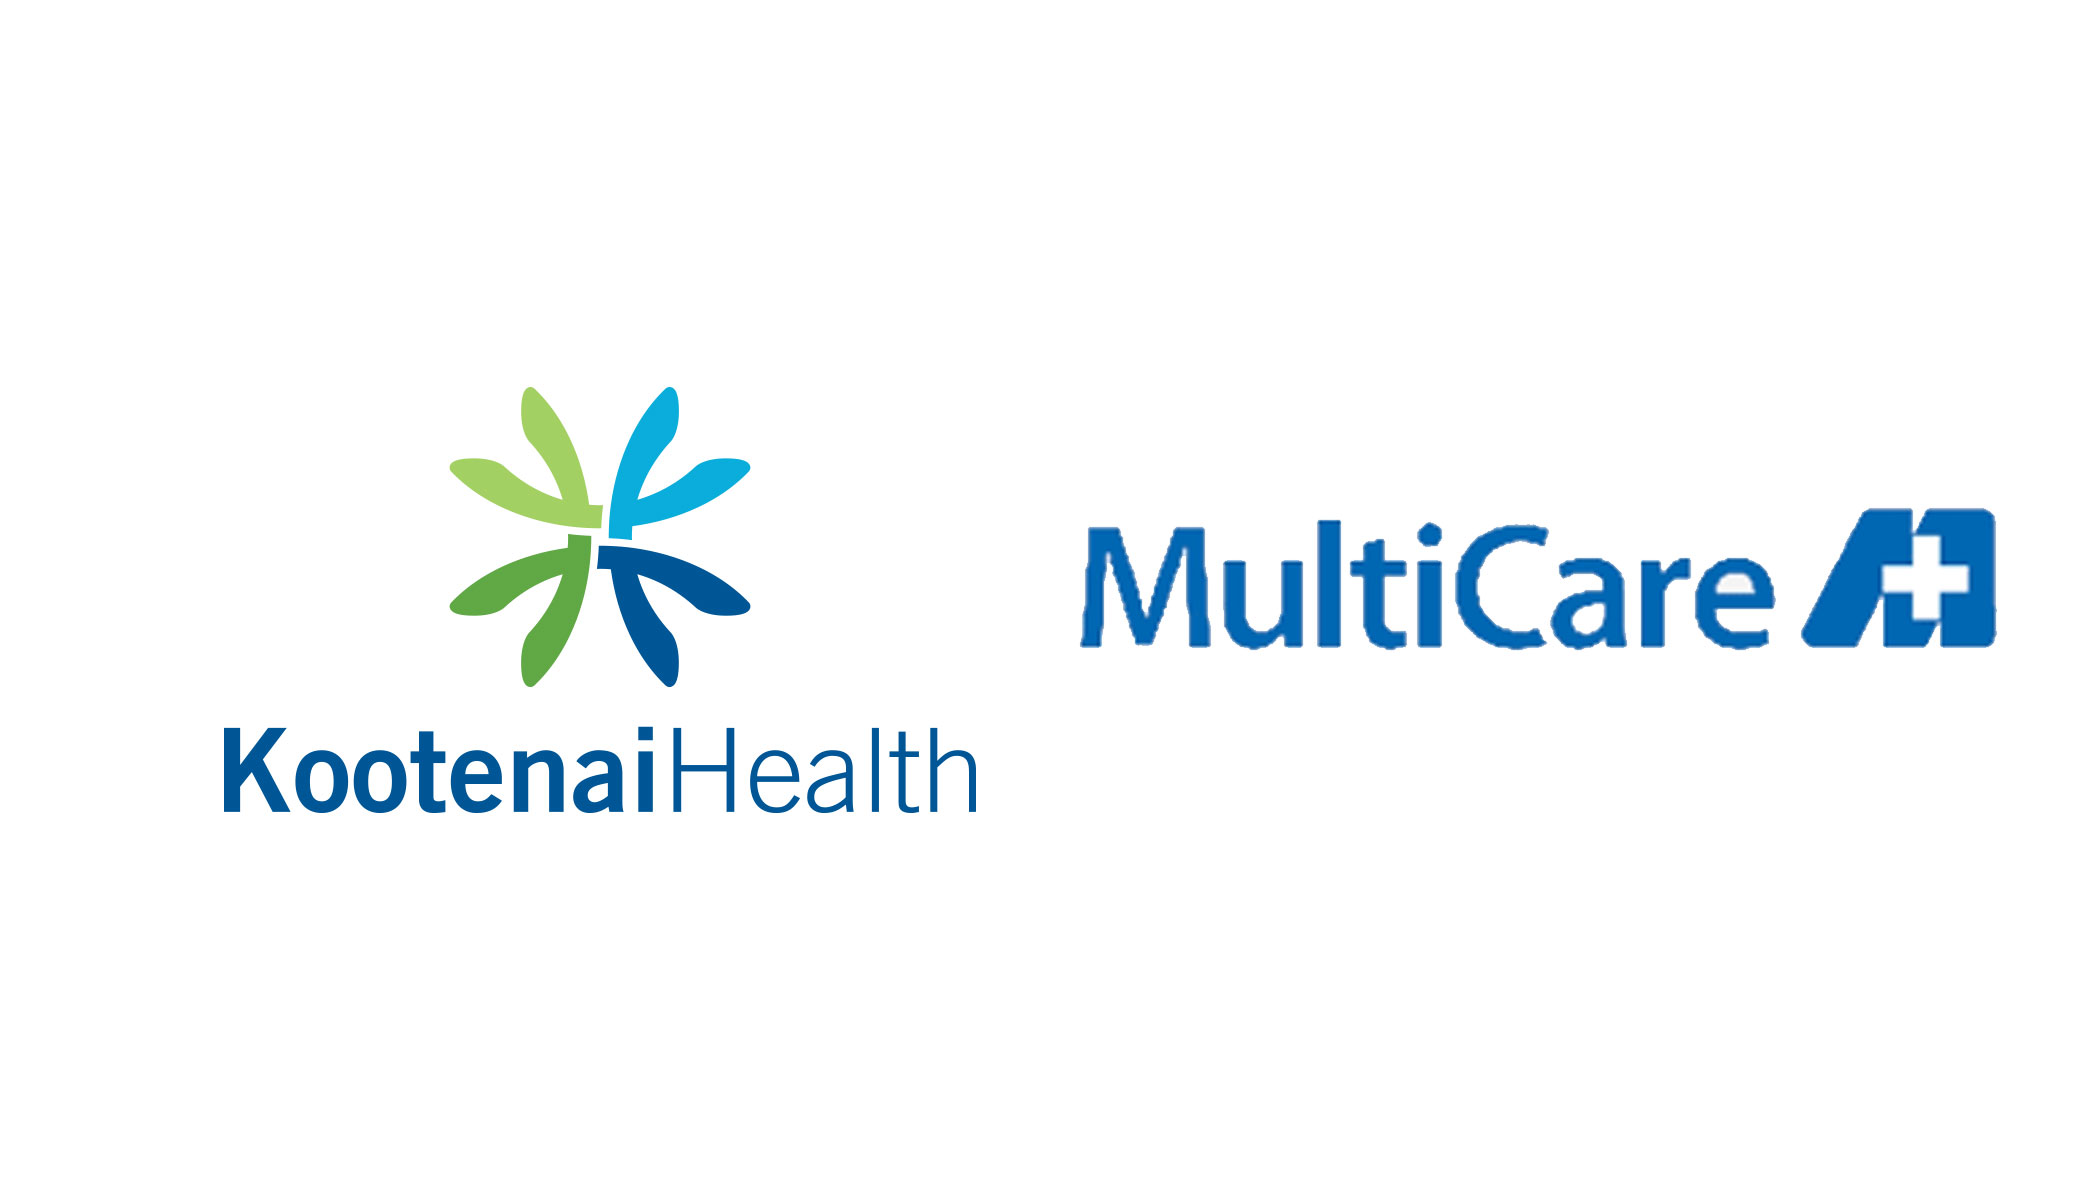 Kootenai Health and MultiCare align on behavioral health